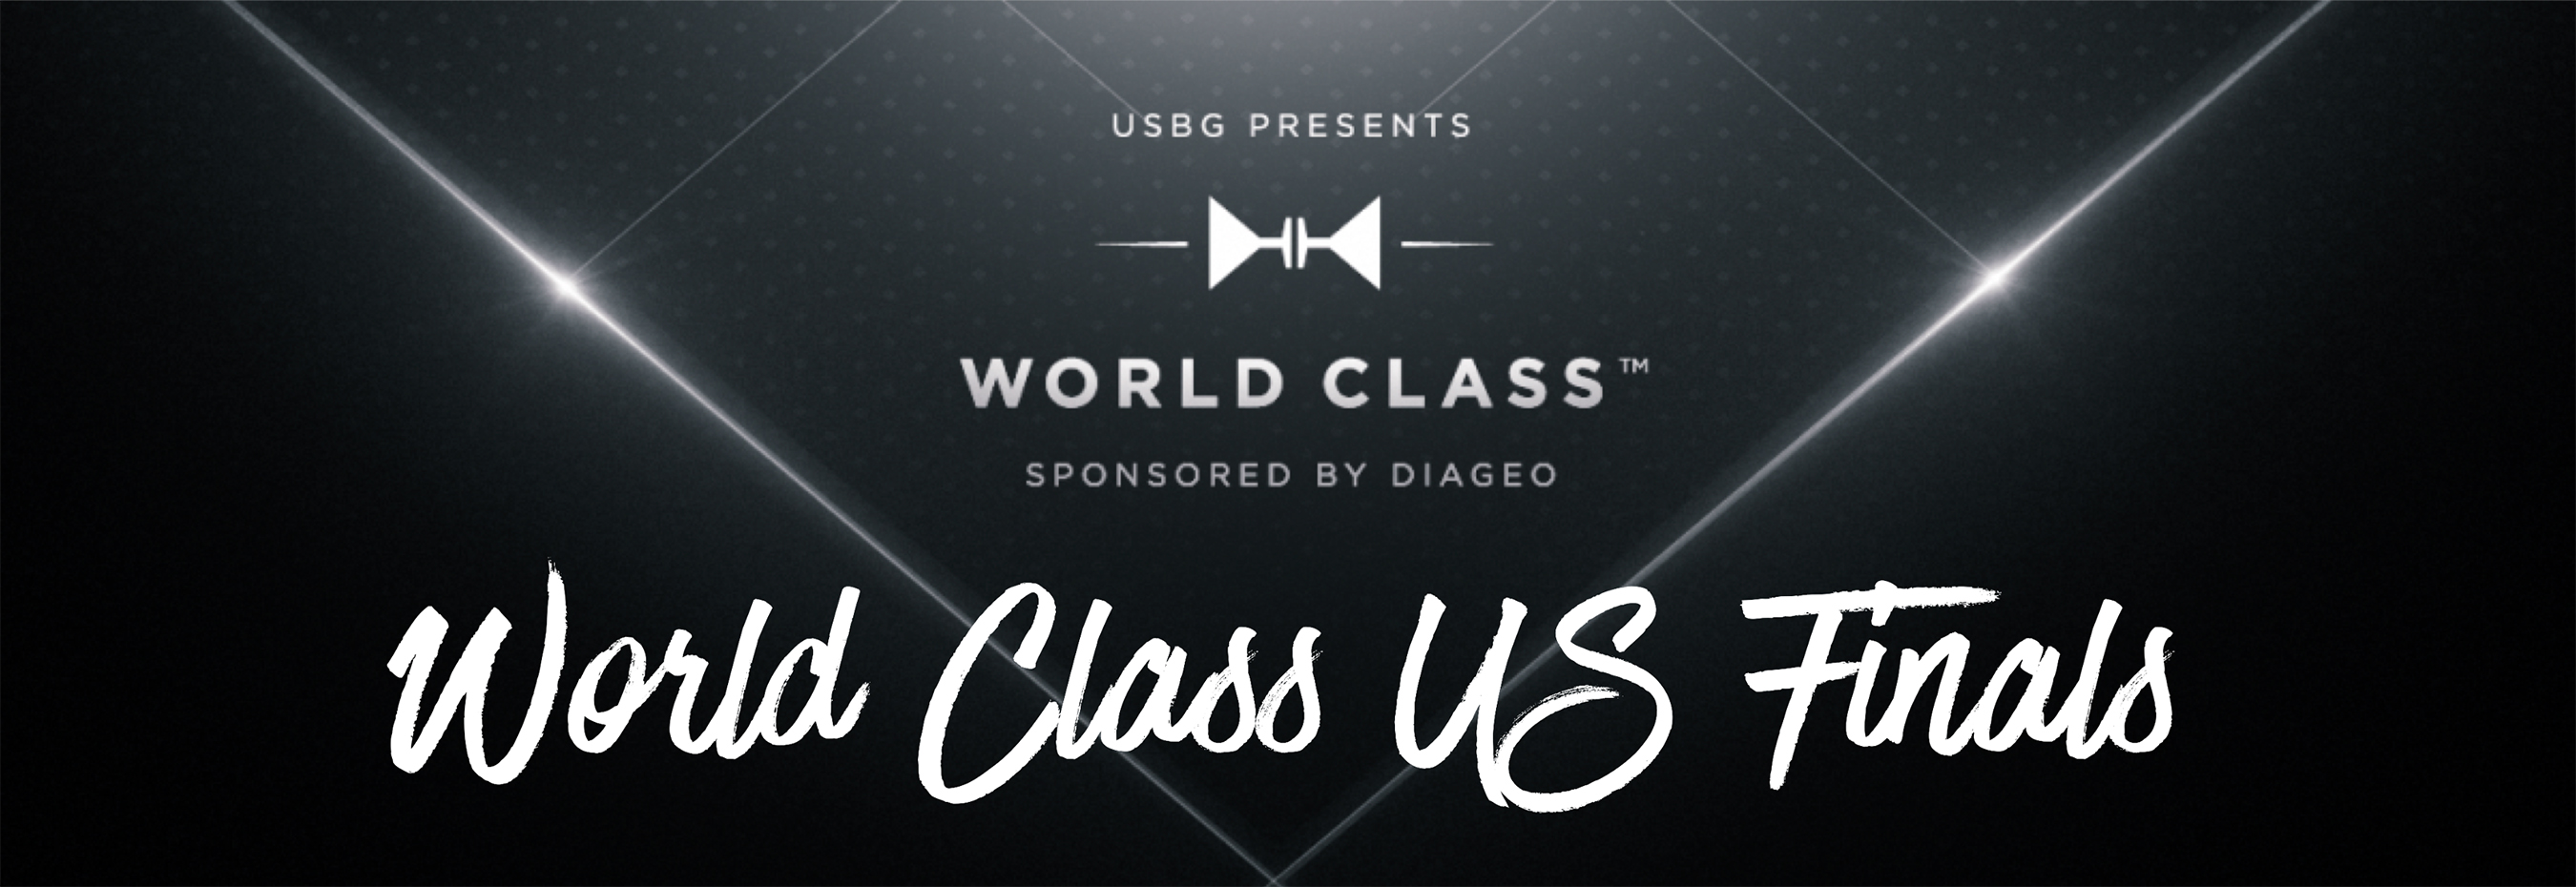 USBG Presents World Class, sponsored by Diageo